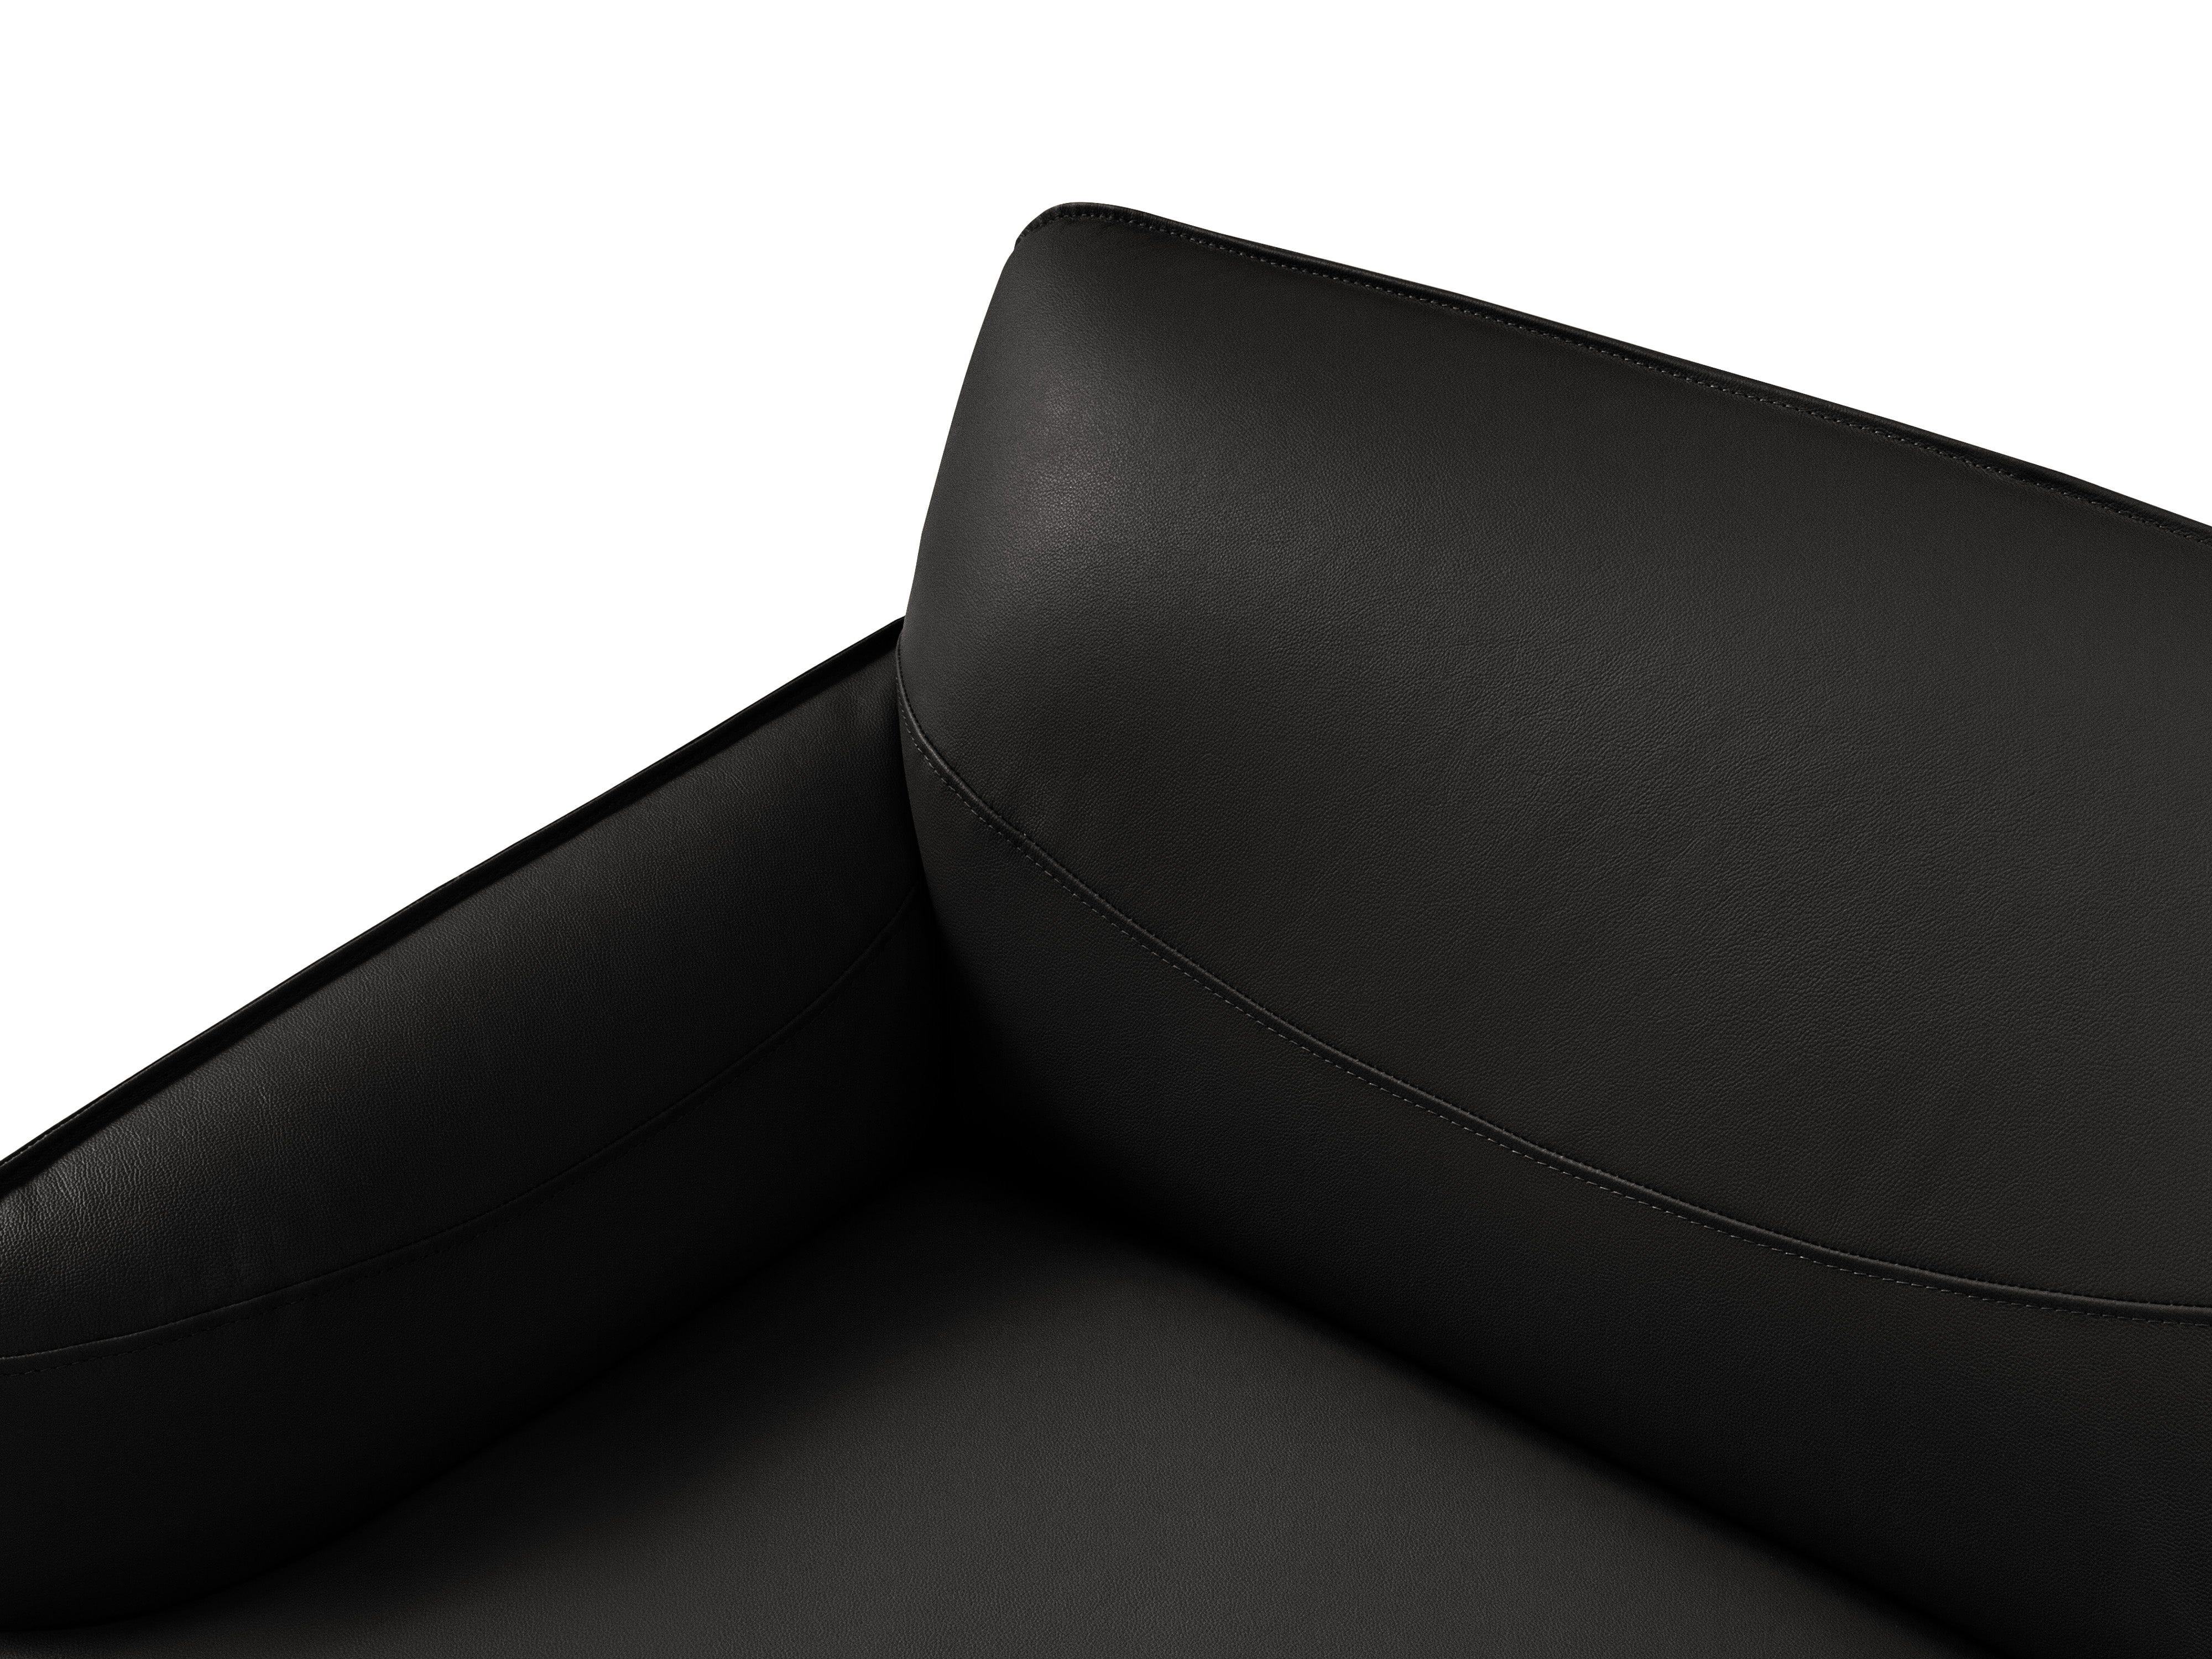 Genuine Leather Sofa, "Neso", 1 Seat, 88x90x76
 ,Black,Black Metal, Windsor & Co, Eye on Design